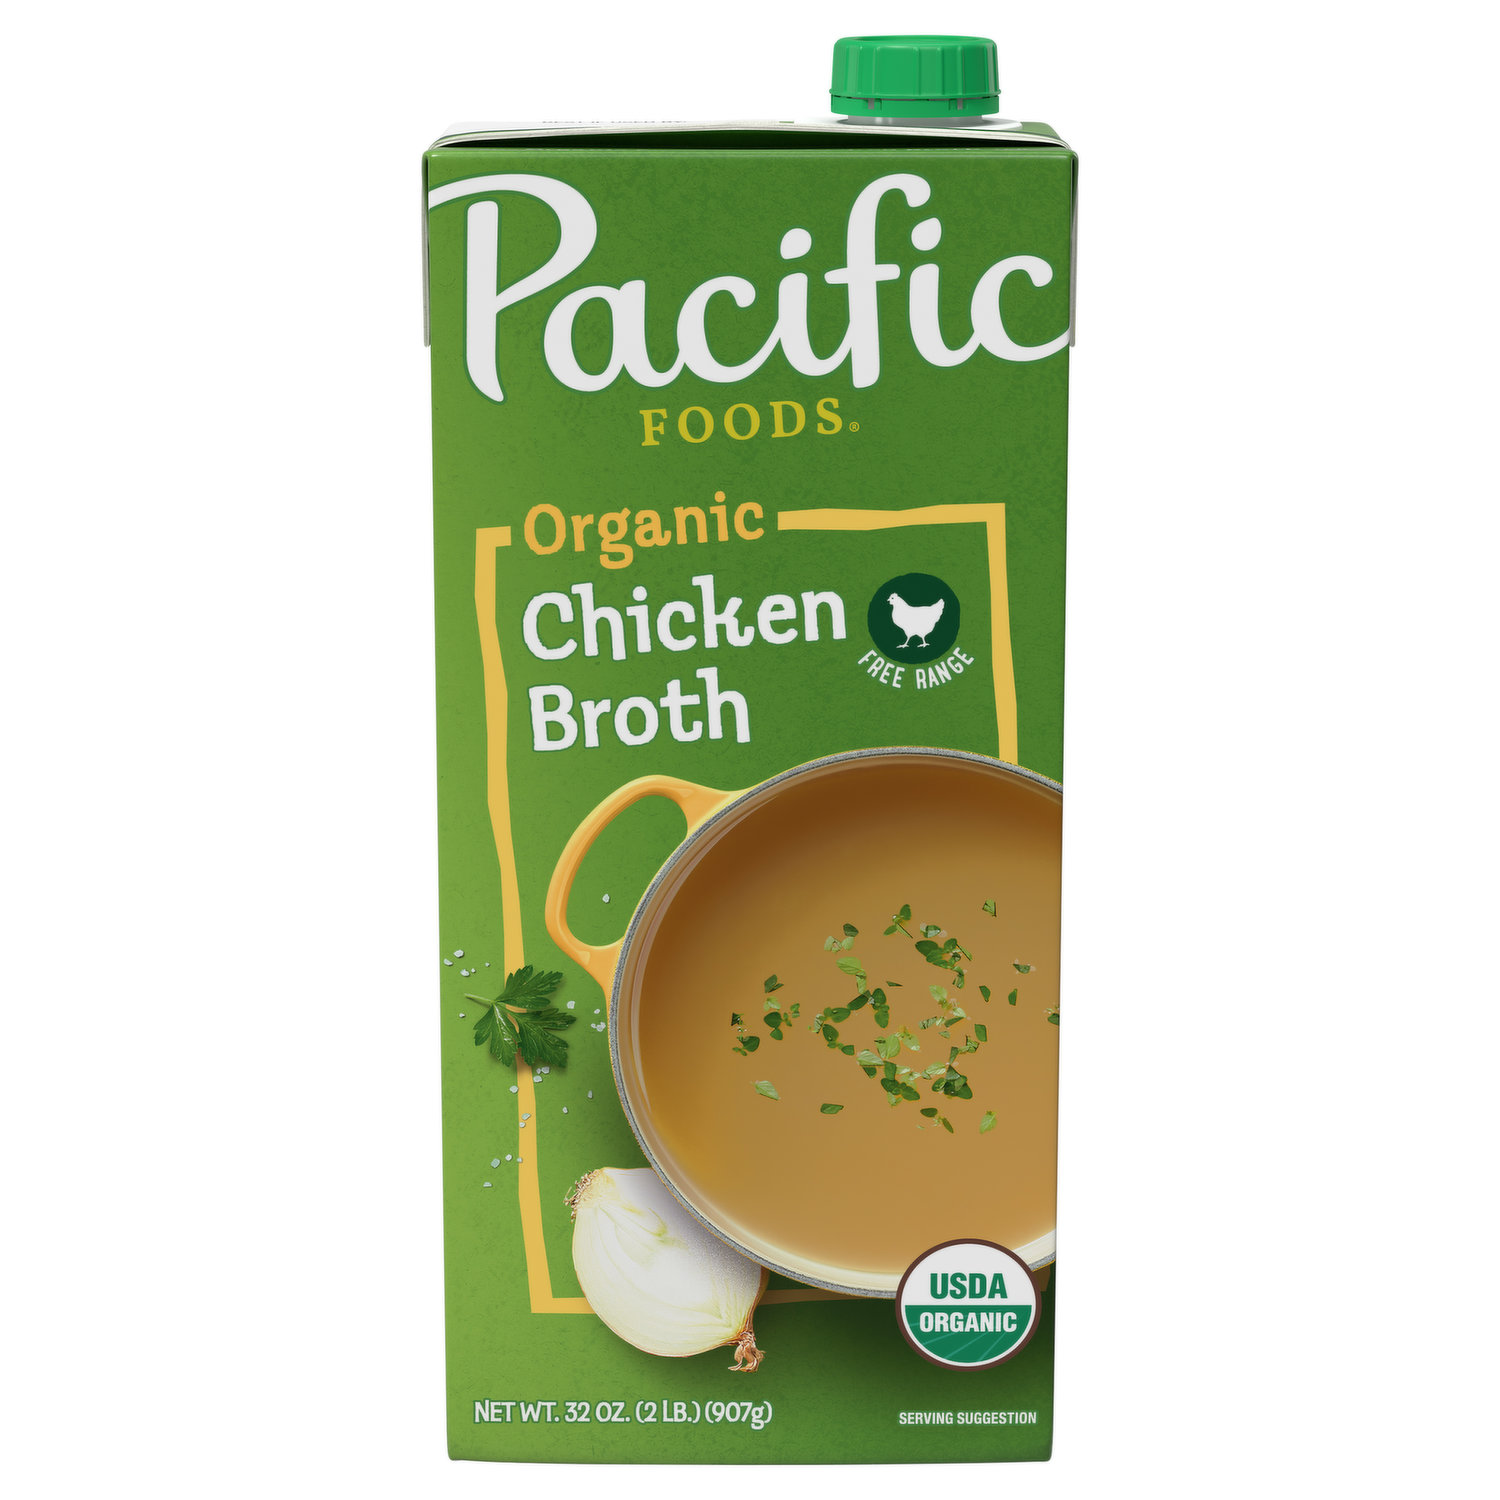 Pacific Foods Bone Broth, Organic, Chicken, Unsalted